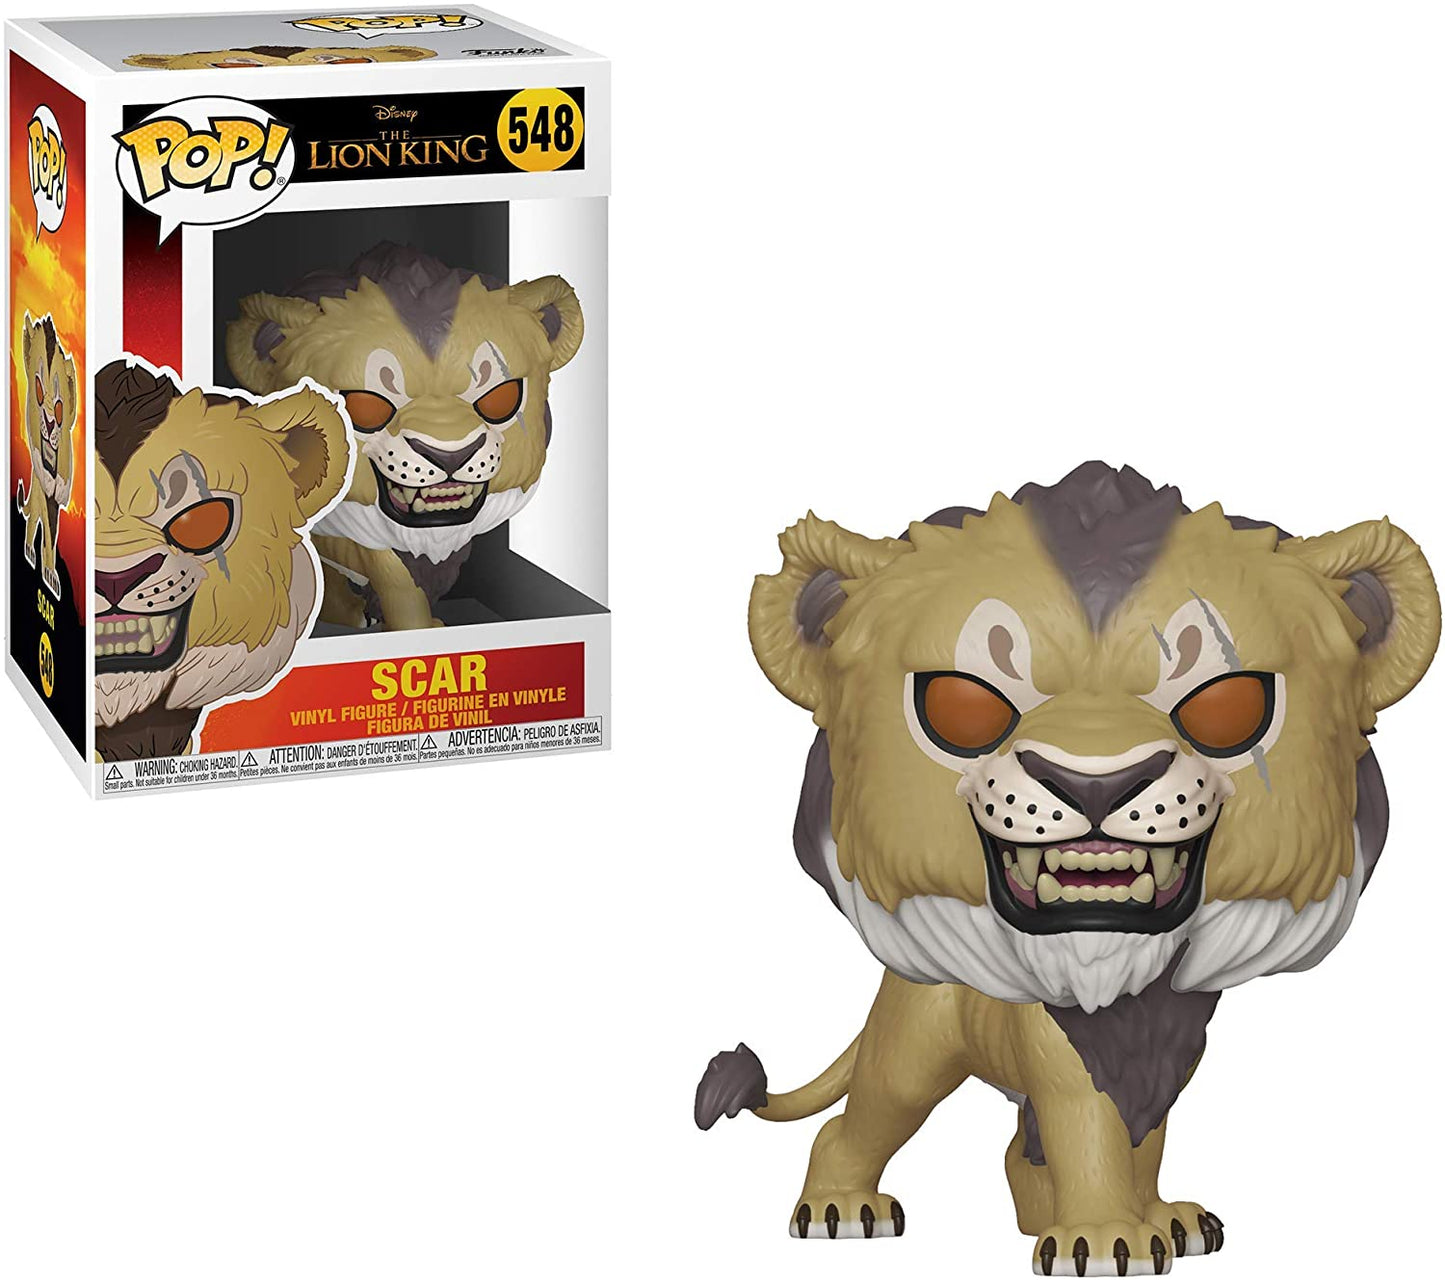 Pop! Disney: The Lion King (Live Action) - Scar (548)